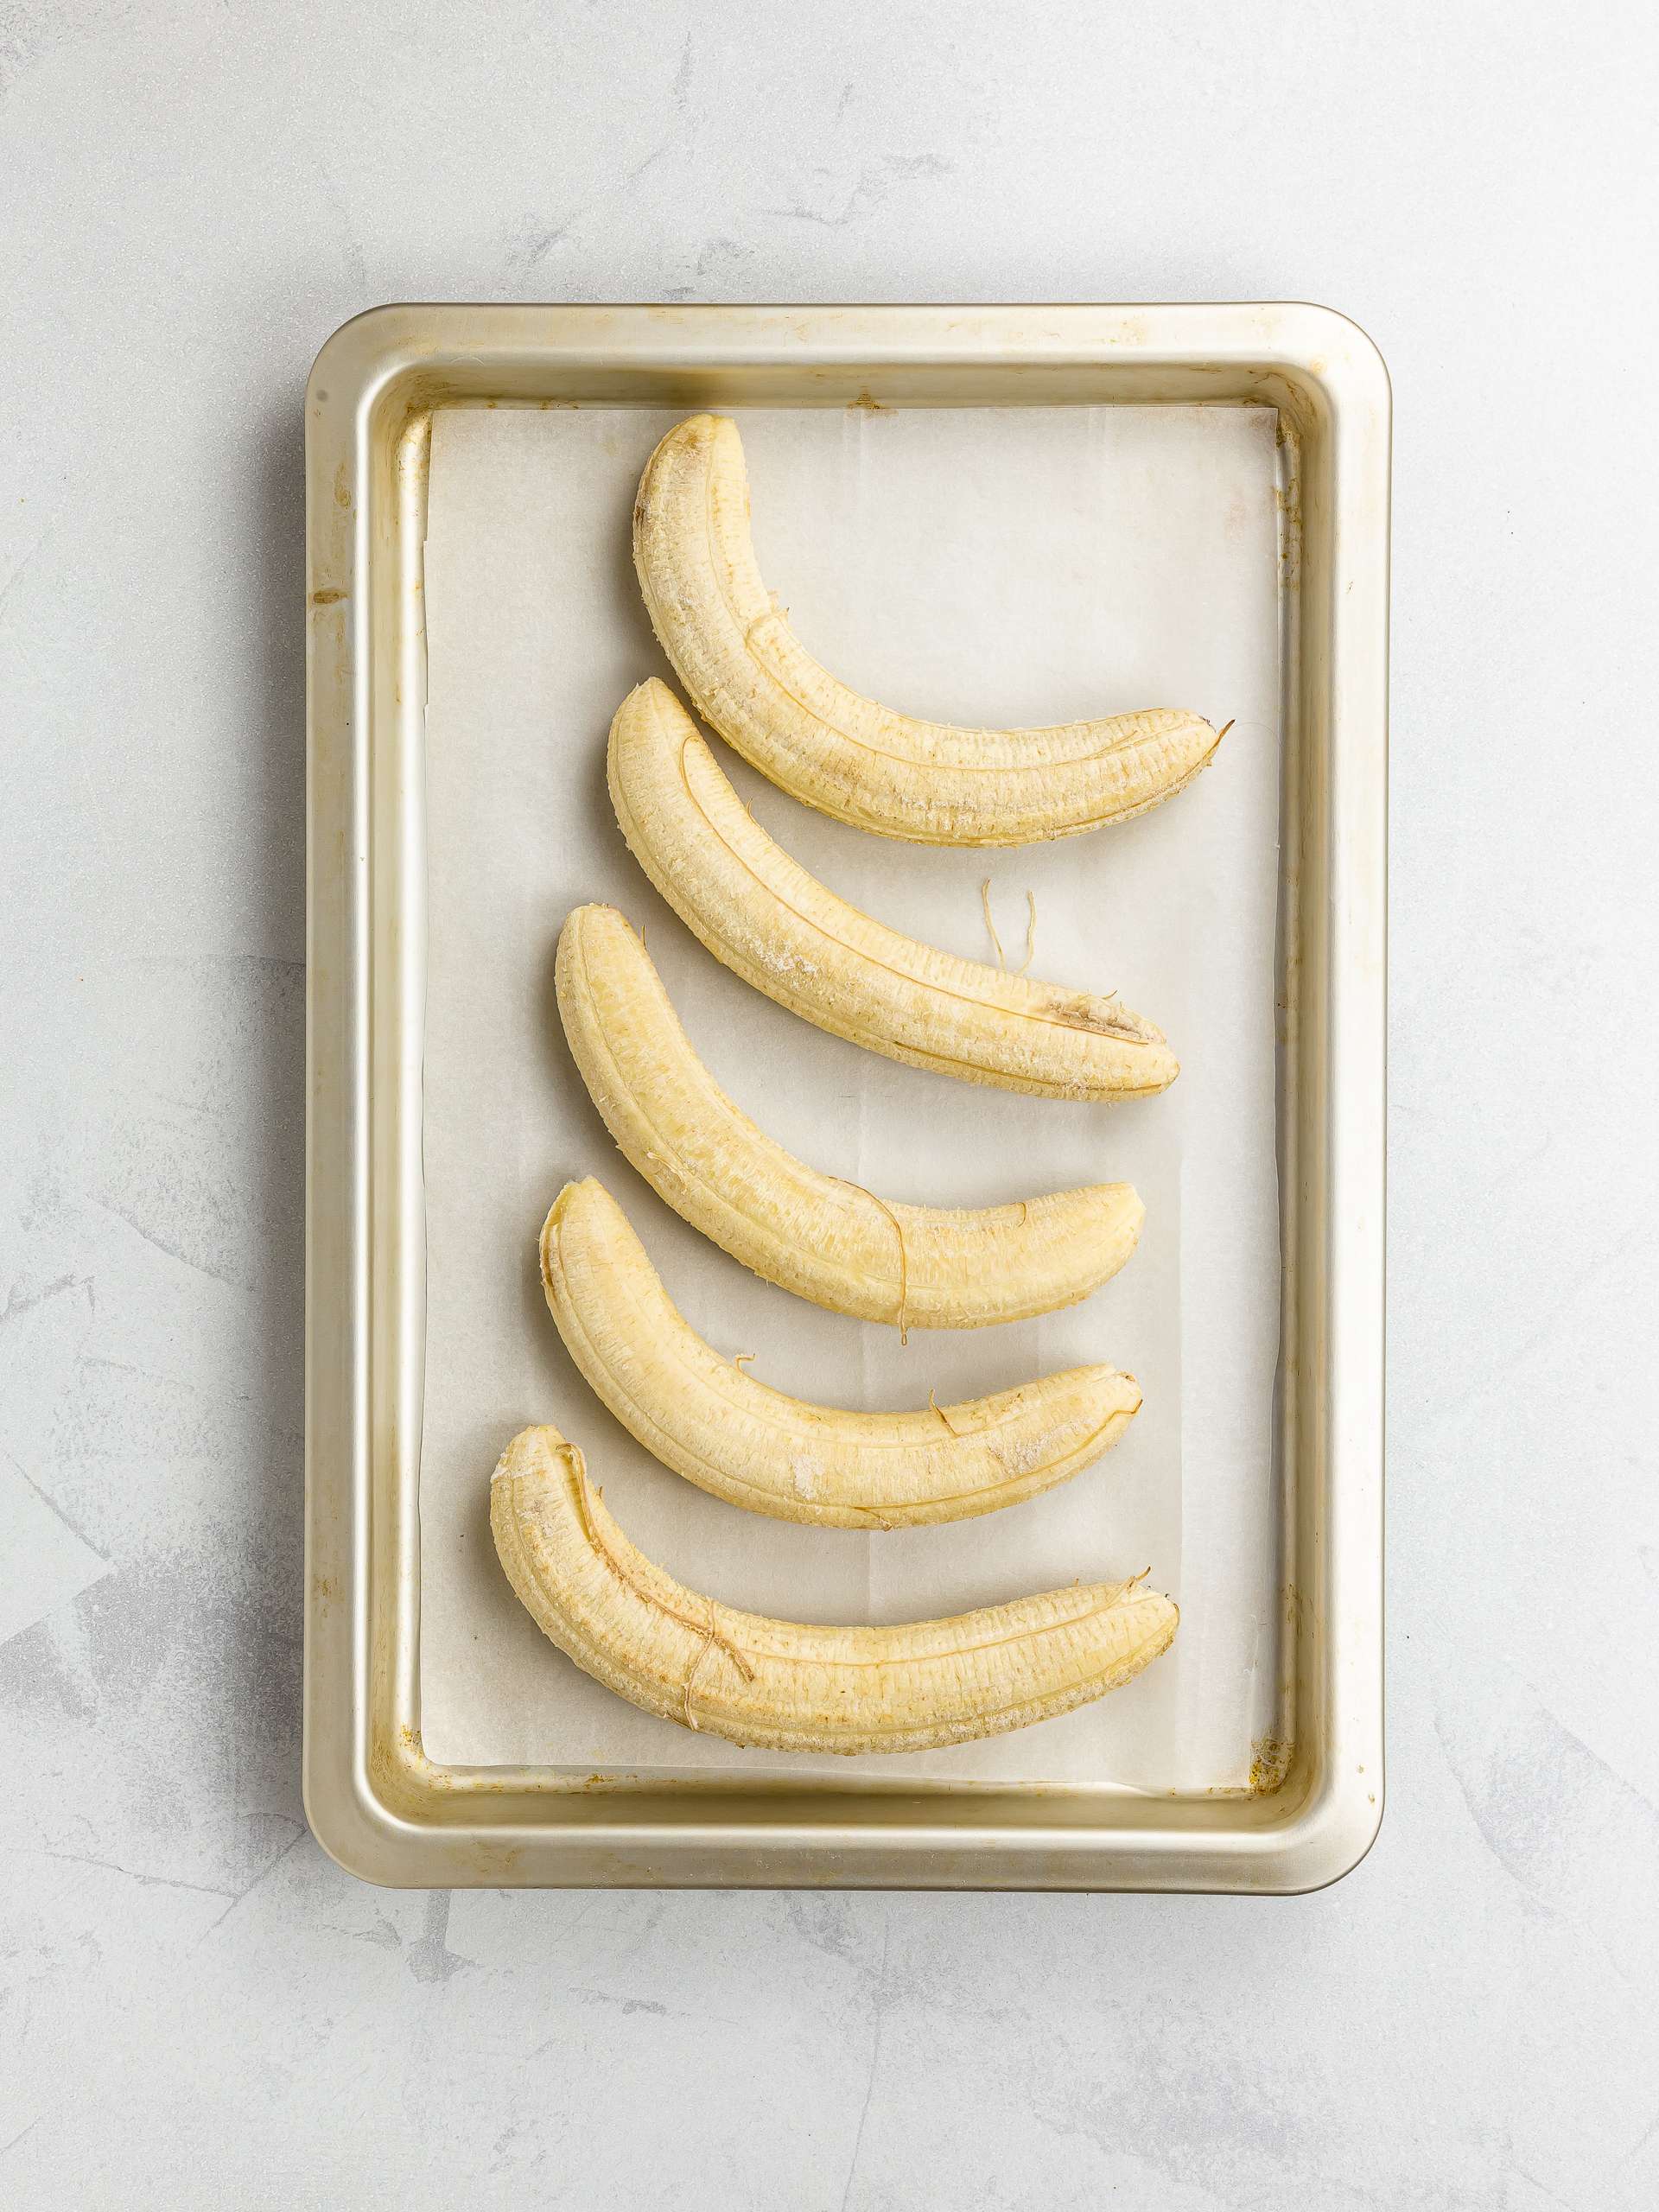 frozen bananas on a tray